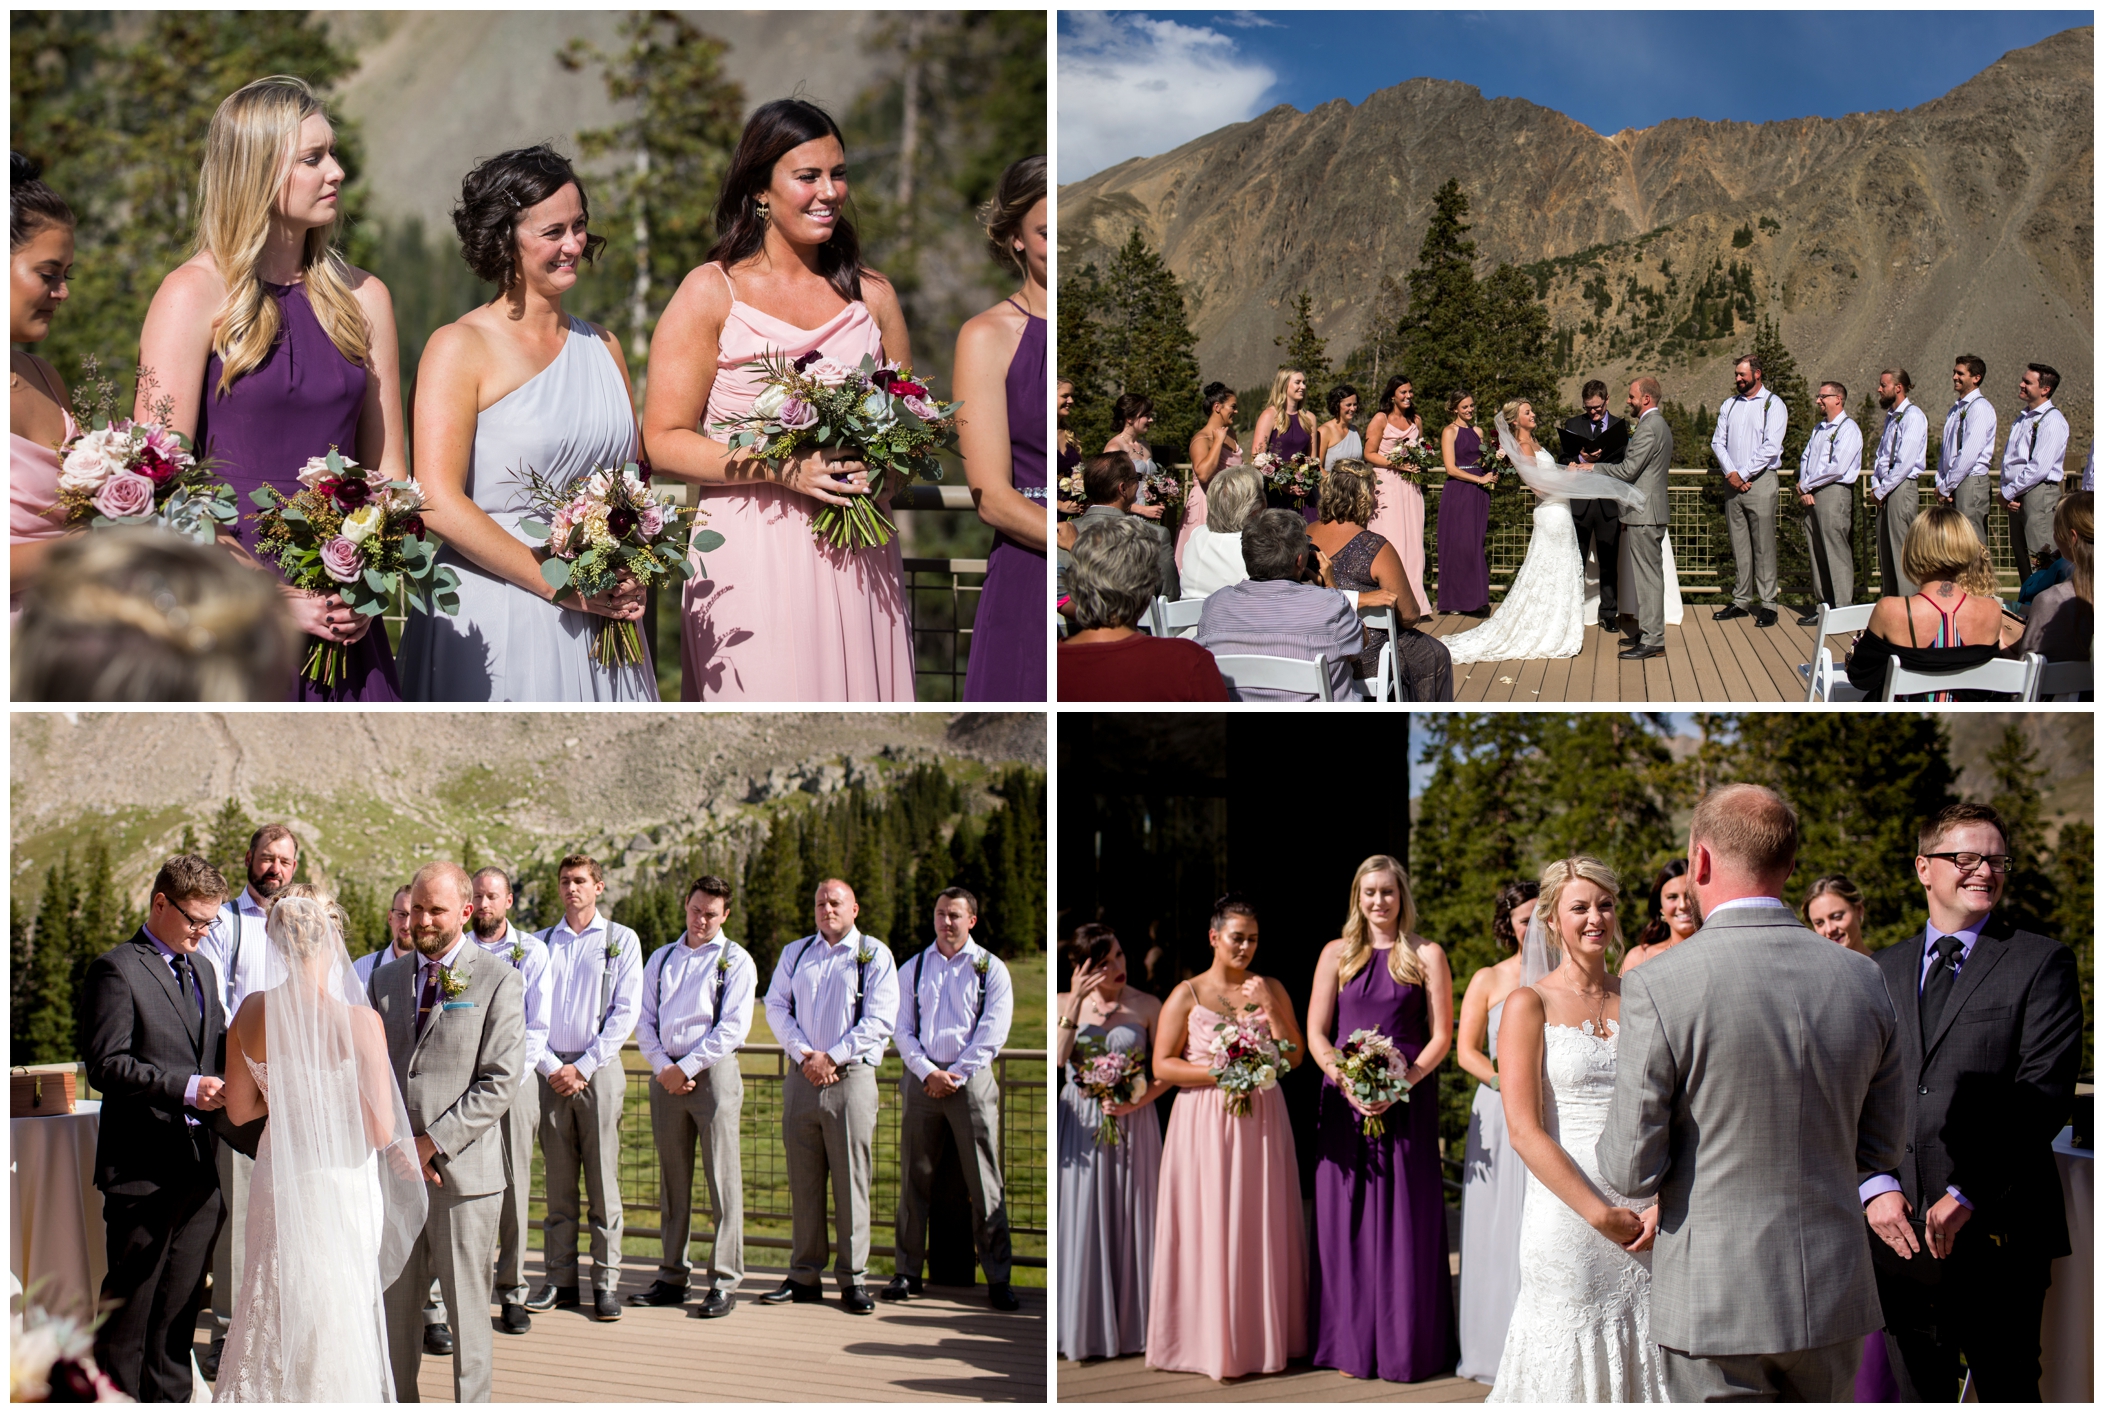 Arapahoe Basin ski resort wedding ceremony photos 